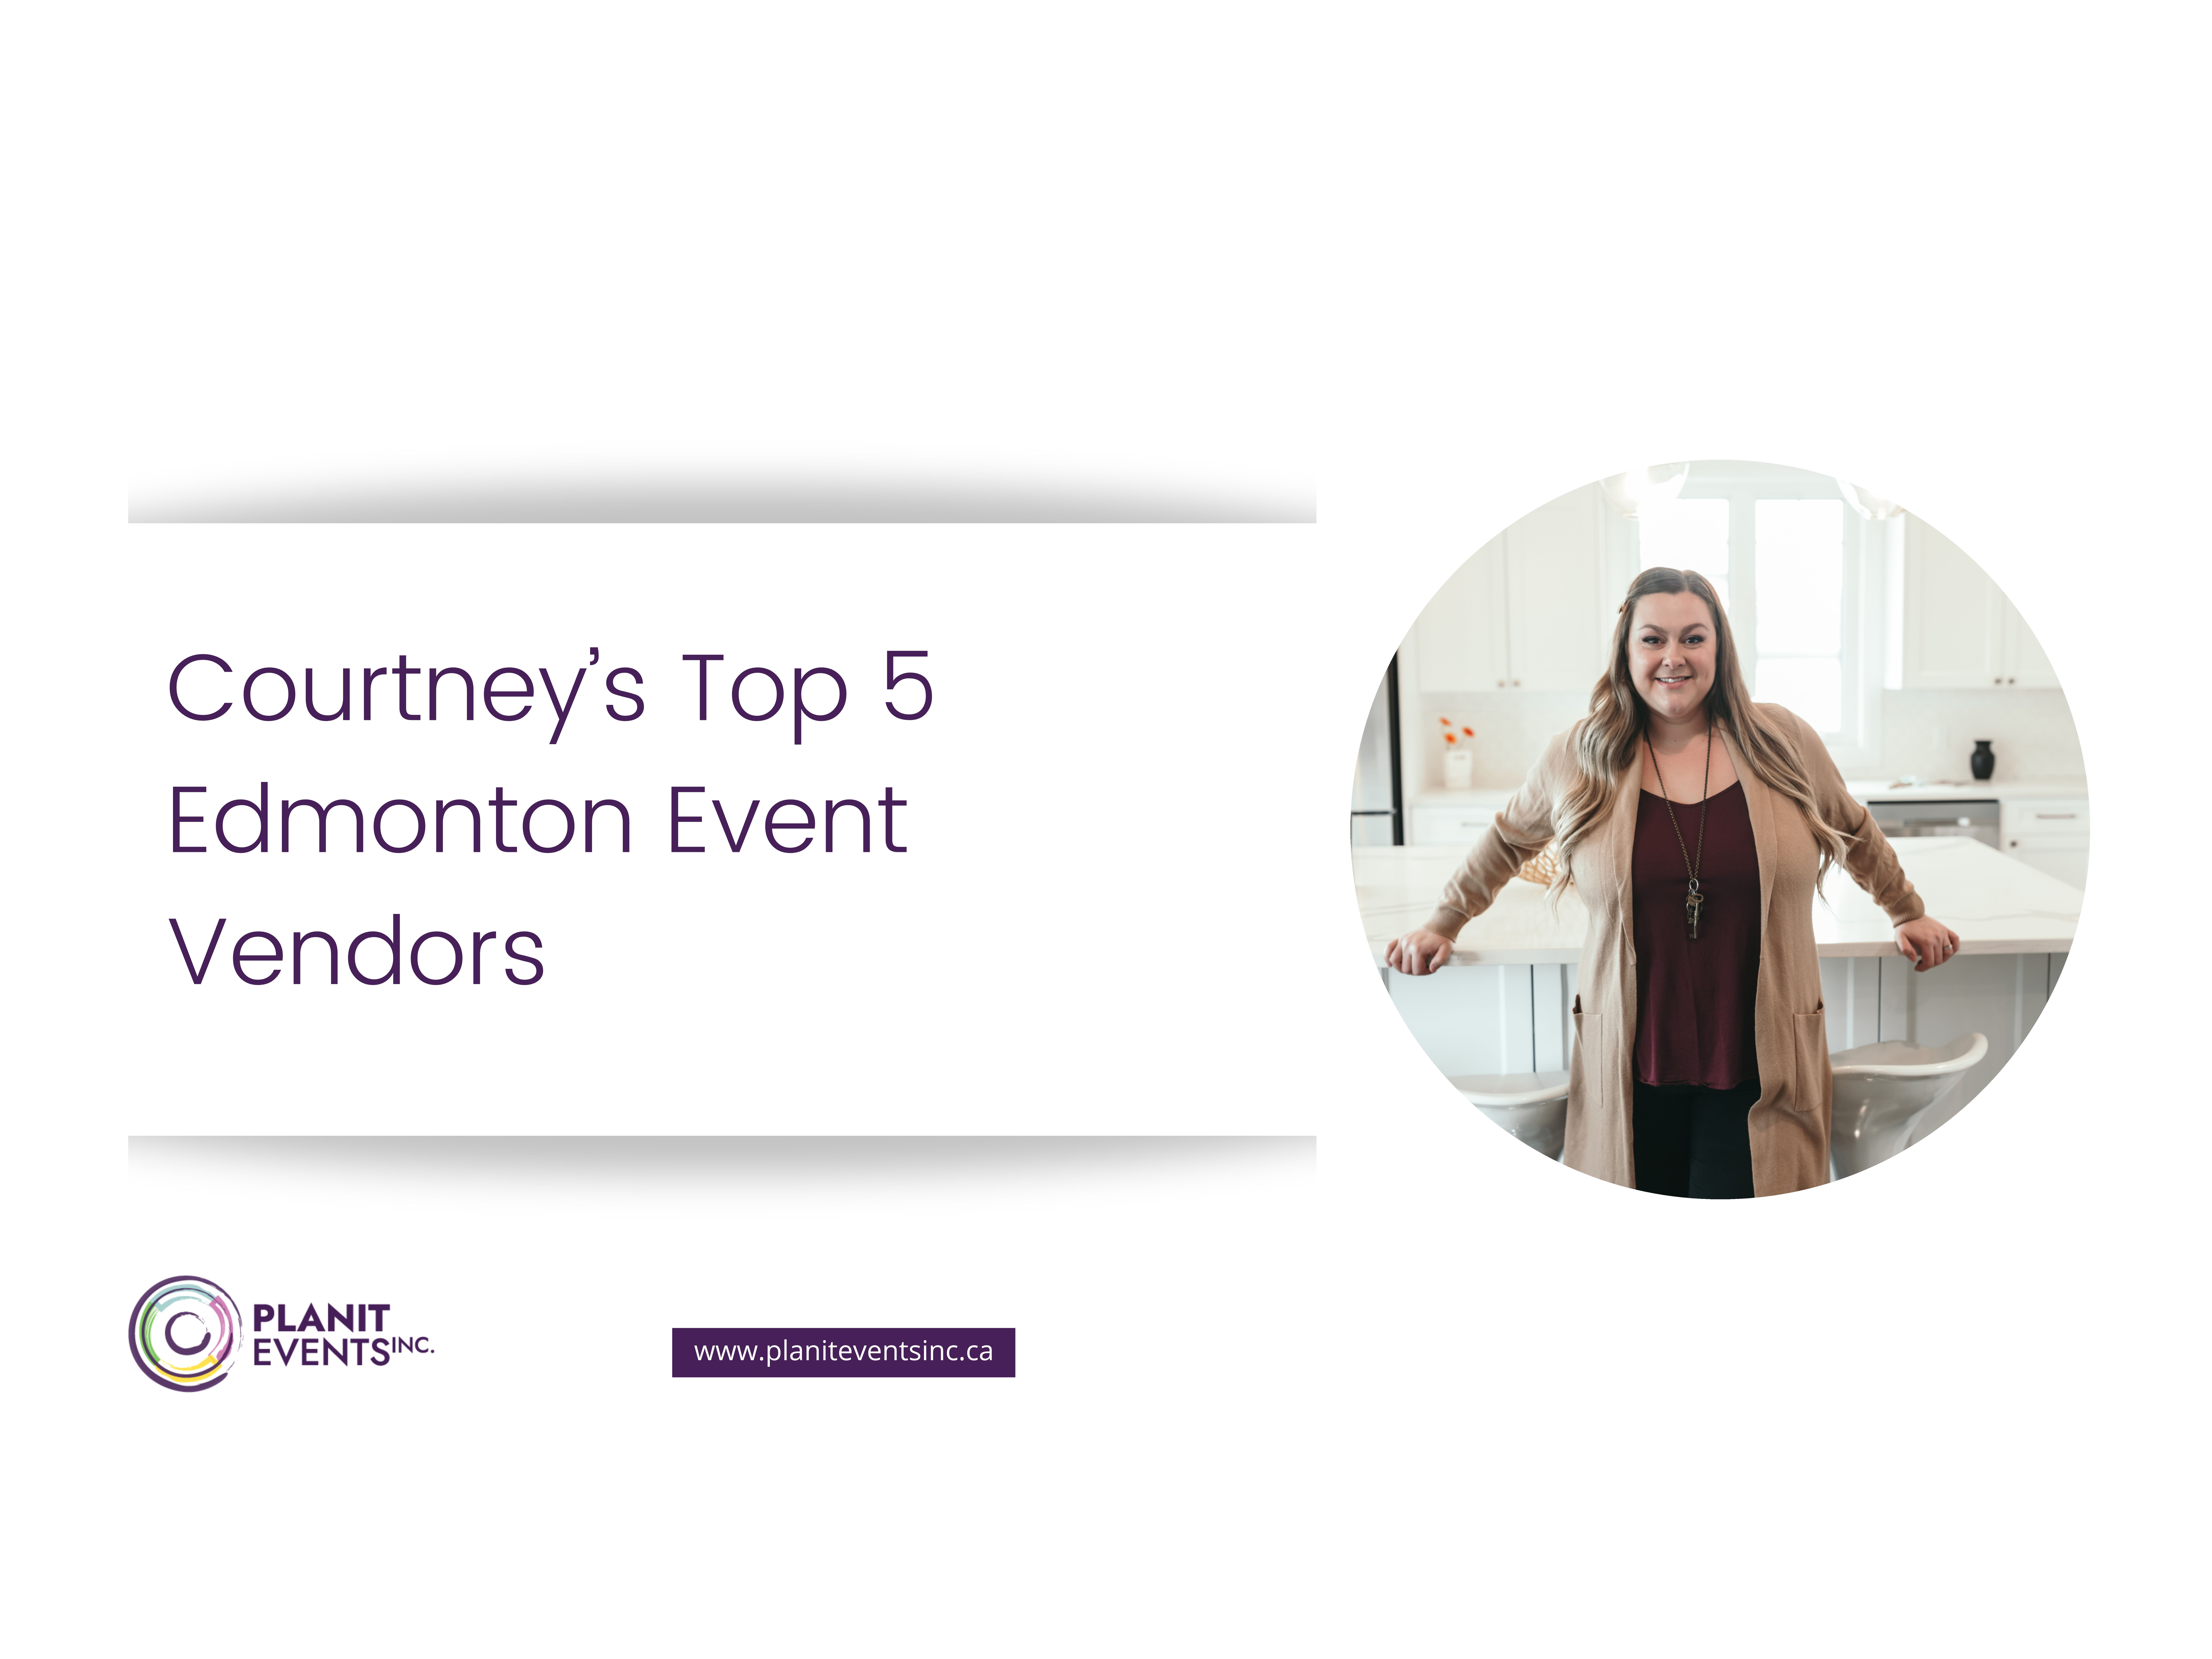 Courtney’s Top 5 Edmonton Event Vendors